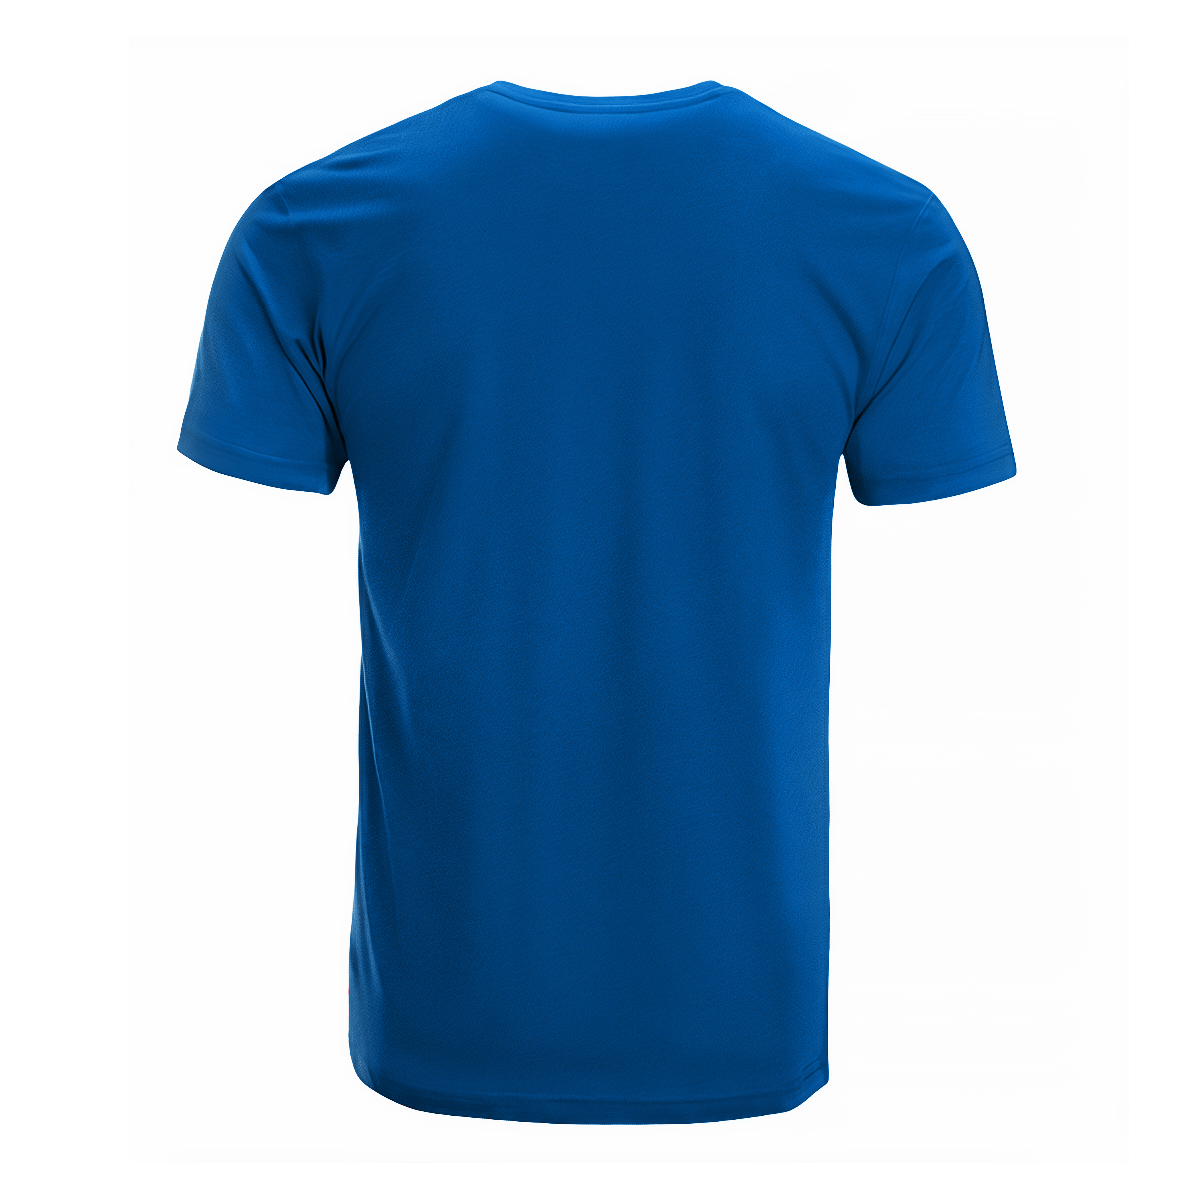 MacArthur Tartan Crest T-shirt - I'm not yelling style